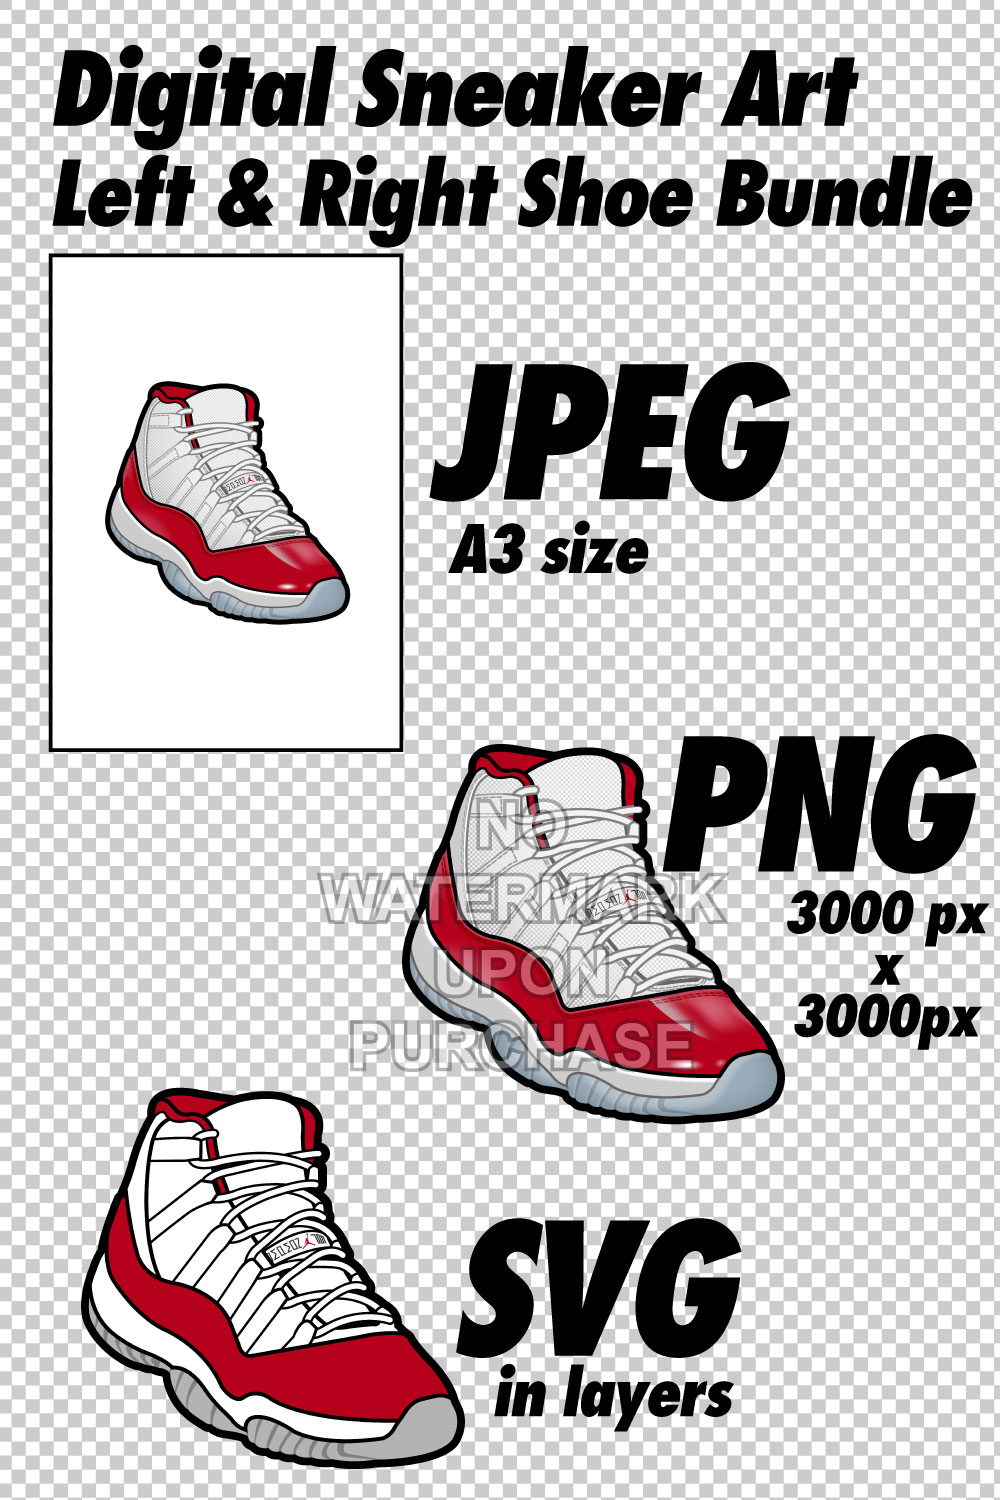 Air Jordan 11 Cherry JPEG PNG SVG Sneaker Art right & left shoe bundle pinterest preview image.